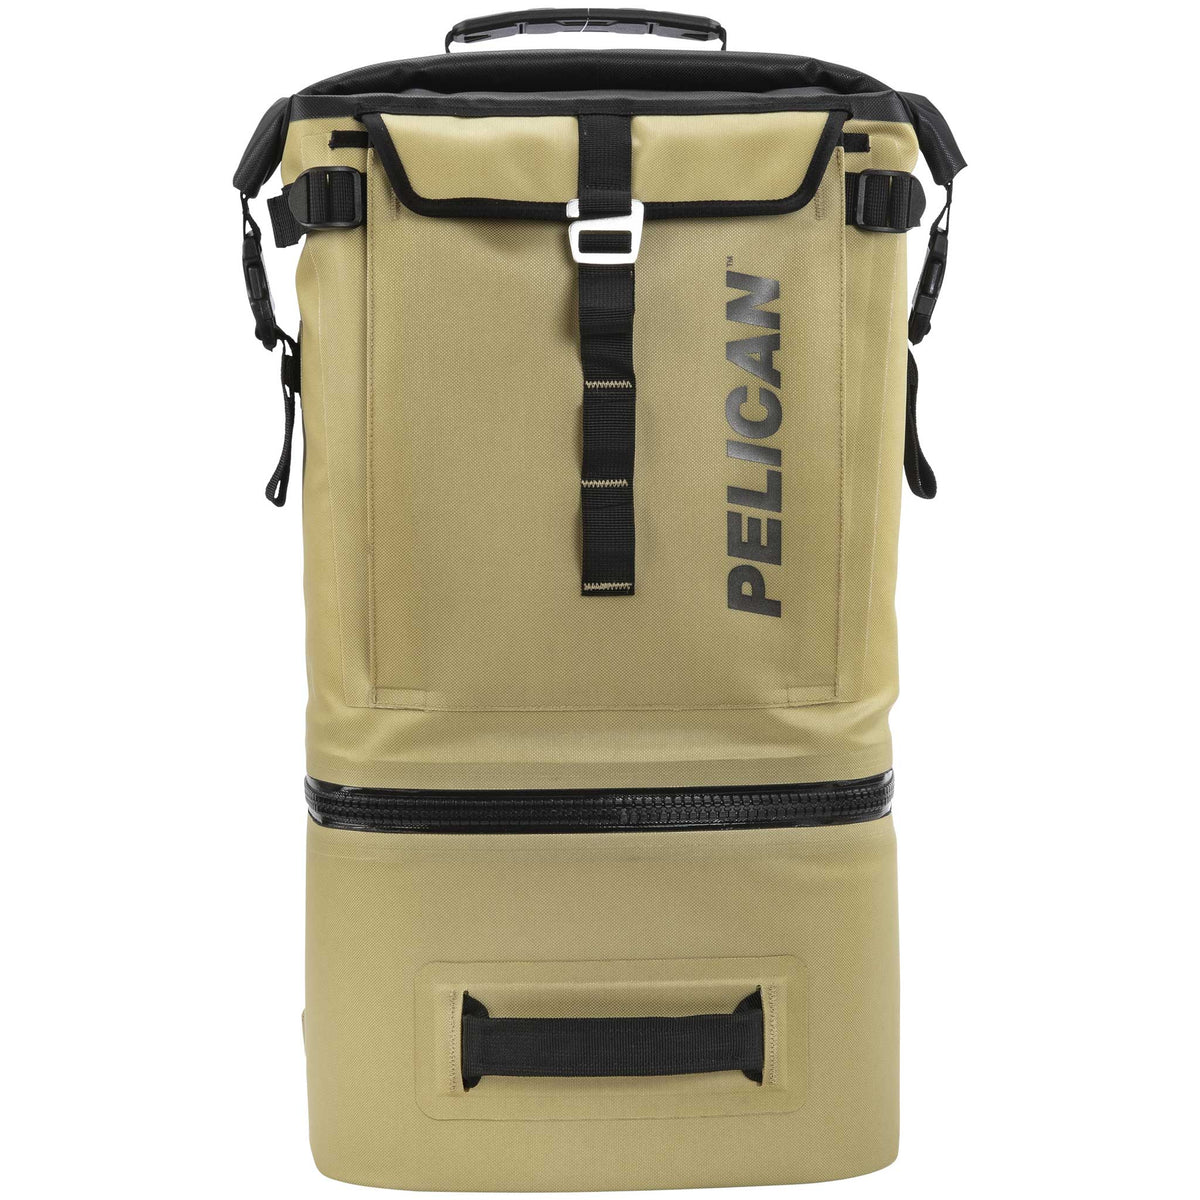 Refurbished Pelican™ Dayventure Backpack Soft Cooler in tan